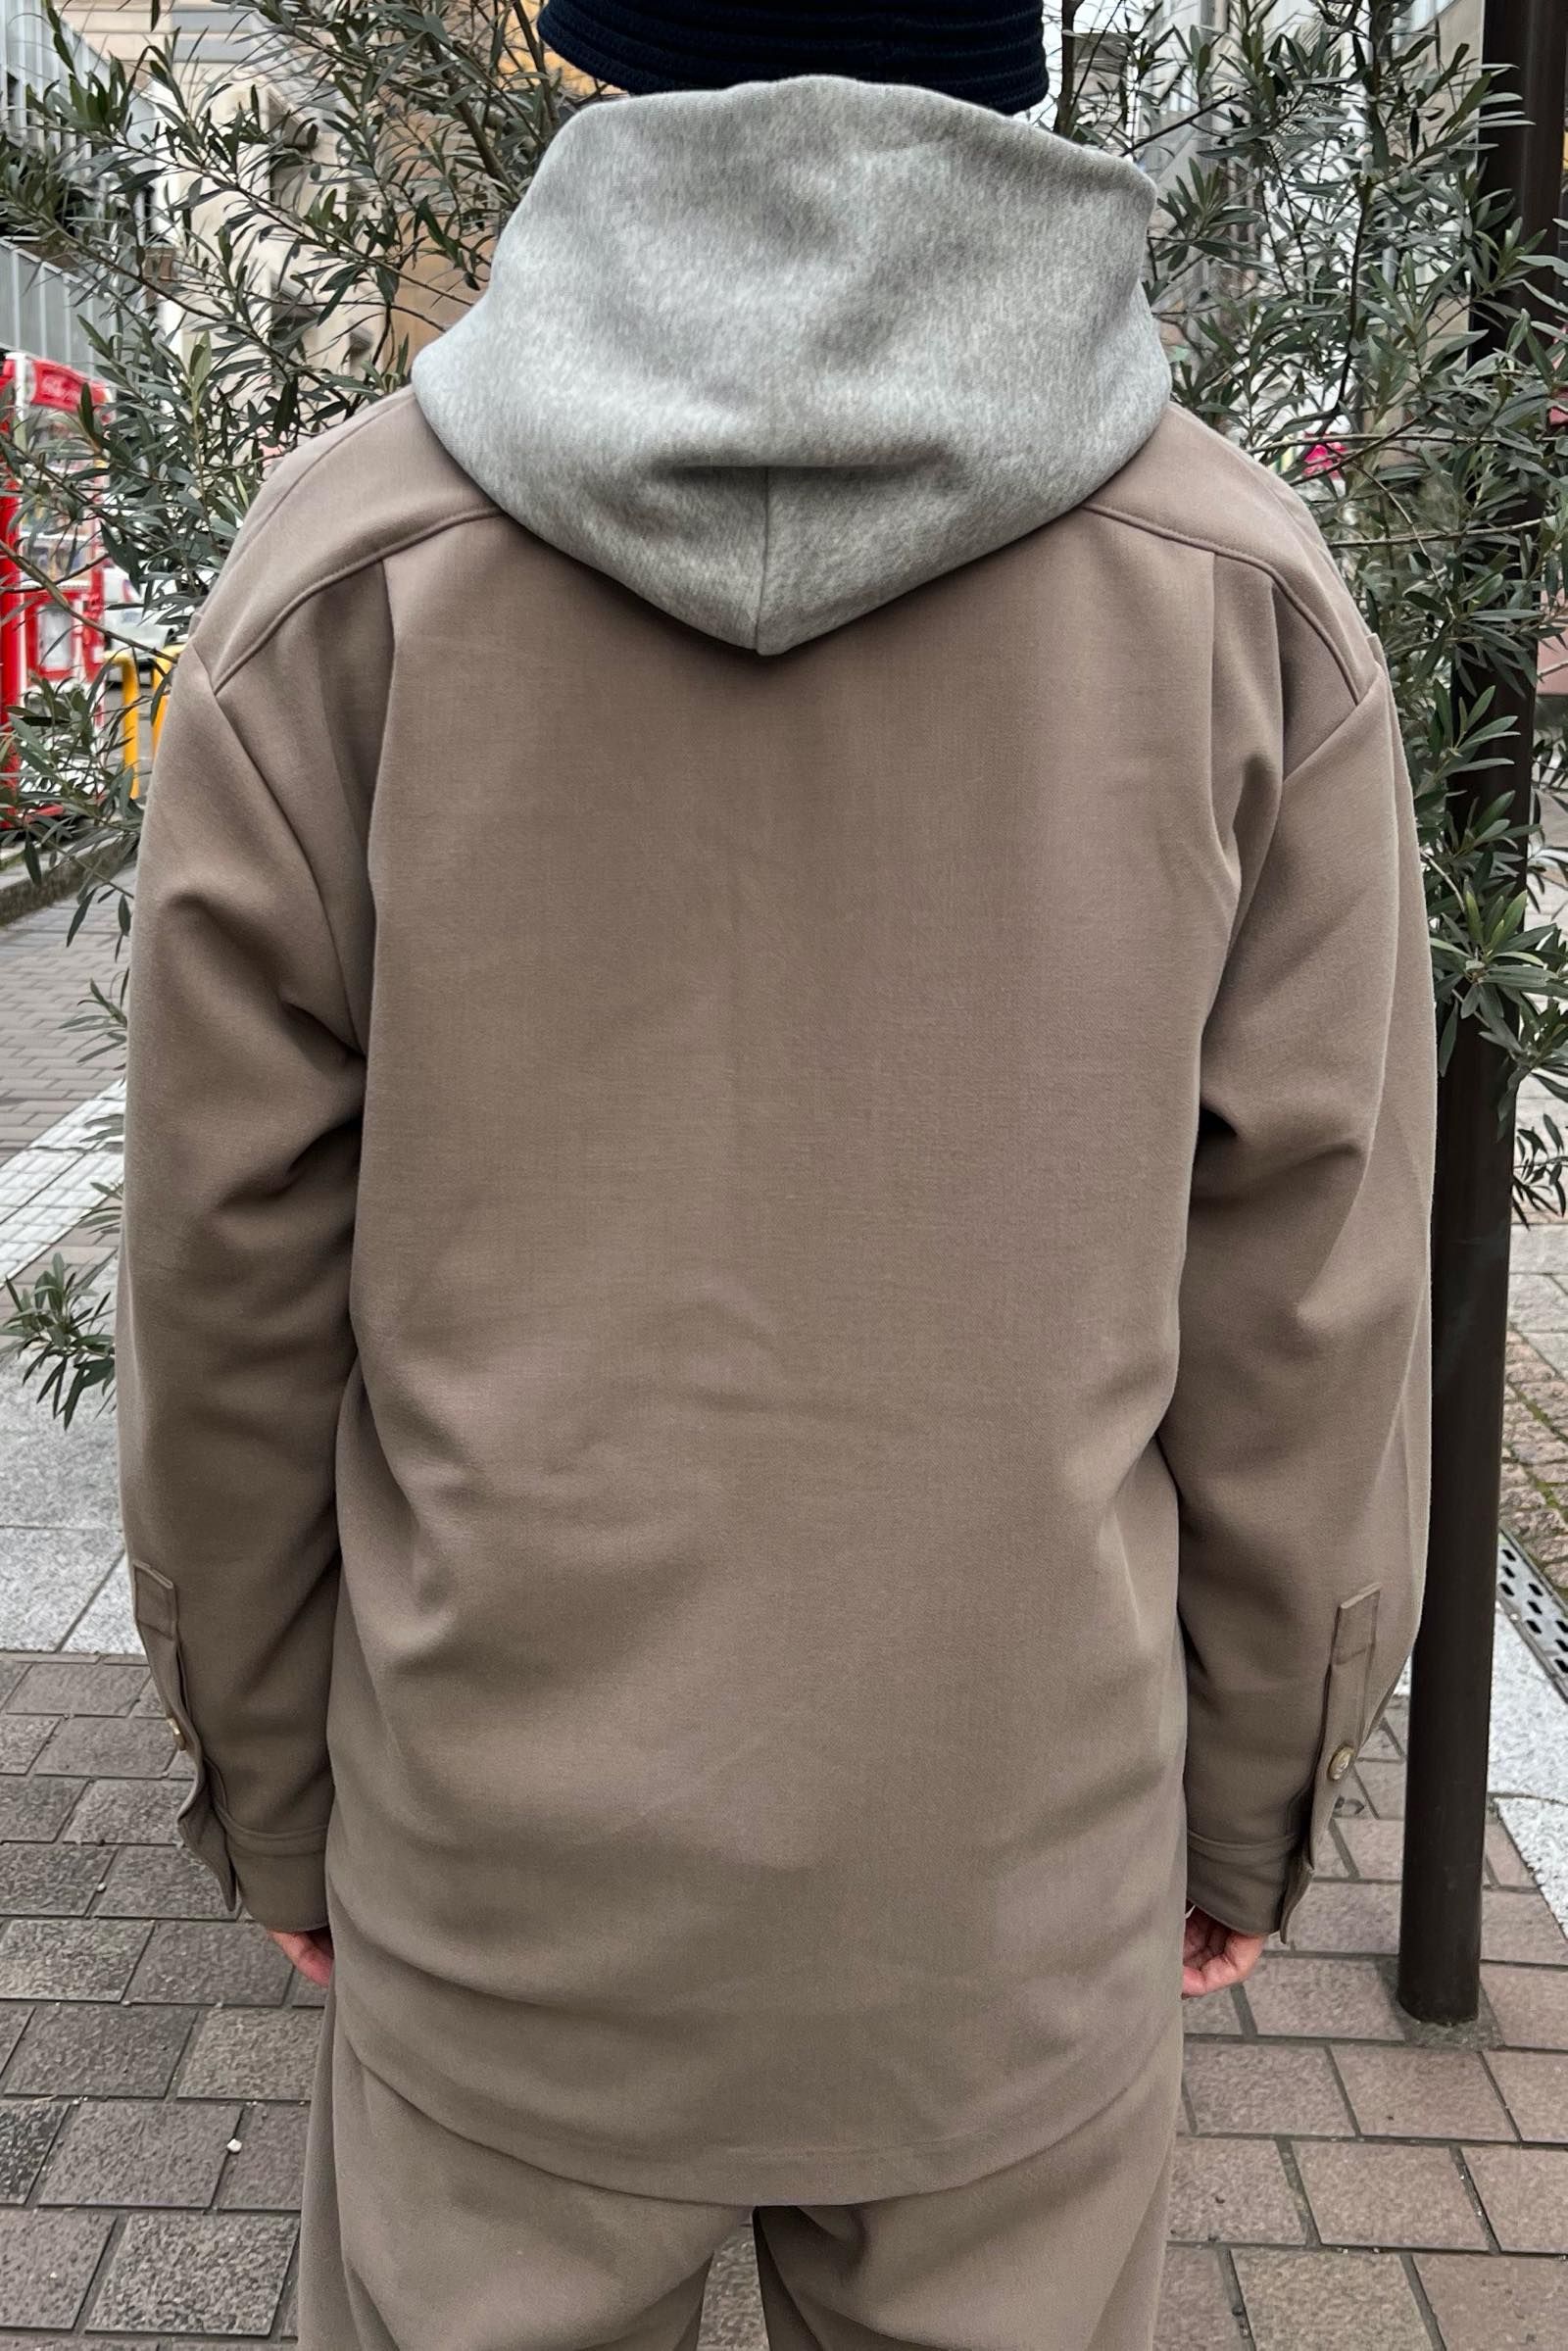 LAMOND - rayon cpo jacket -walnut- 22ss | asterisk